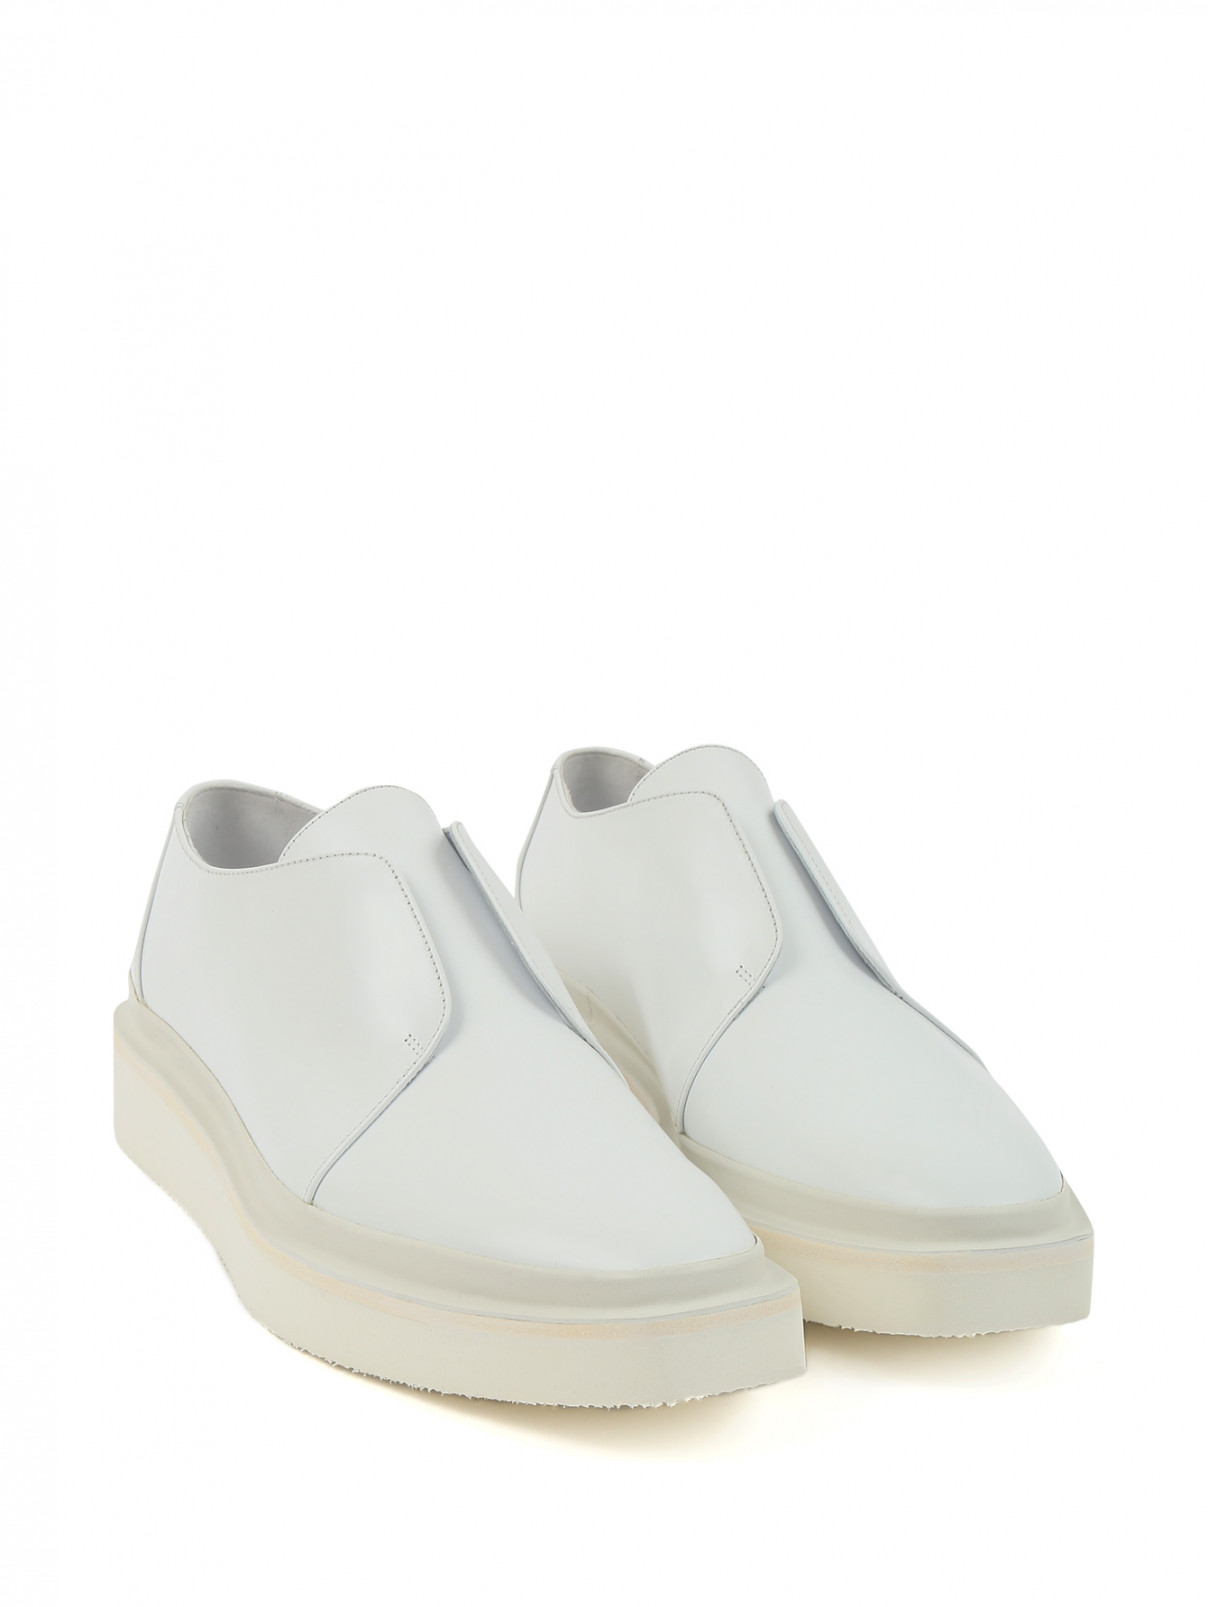 Ботинки из гладкой кожи на платформе Jil Sander  –  Общий вид  – Цвет:  Белый